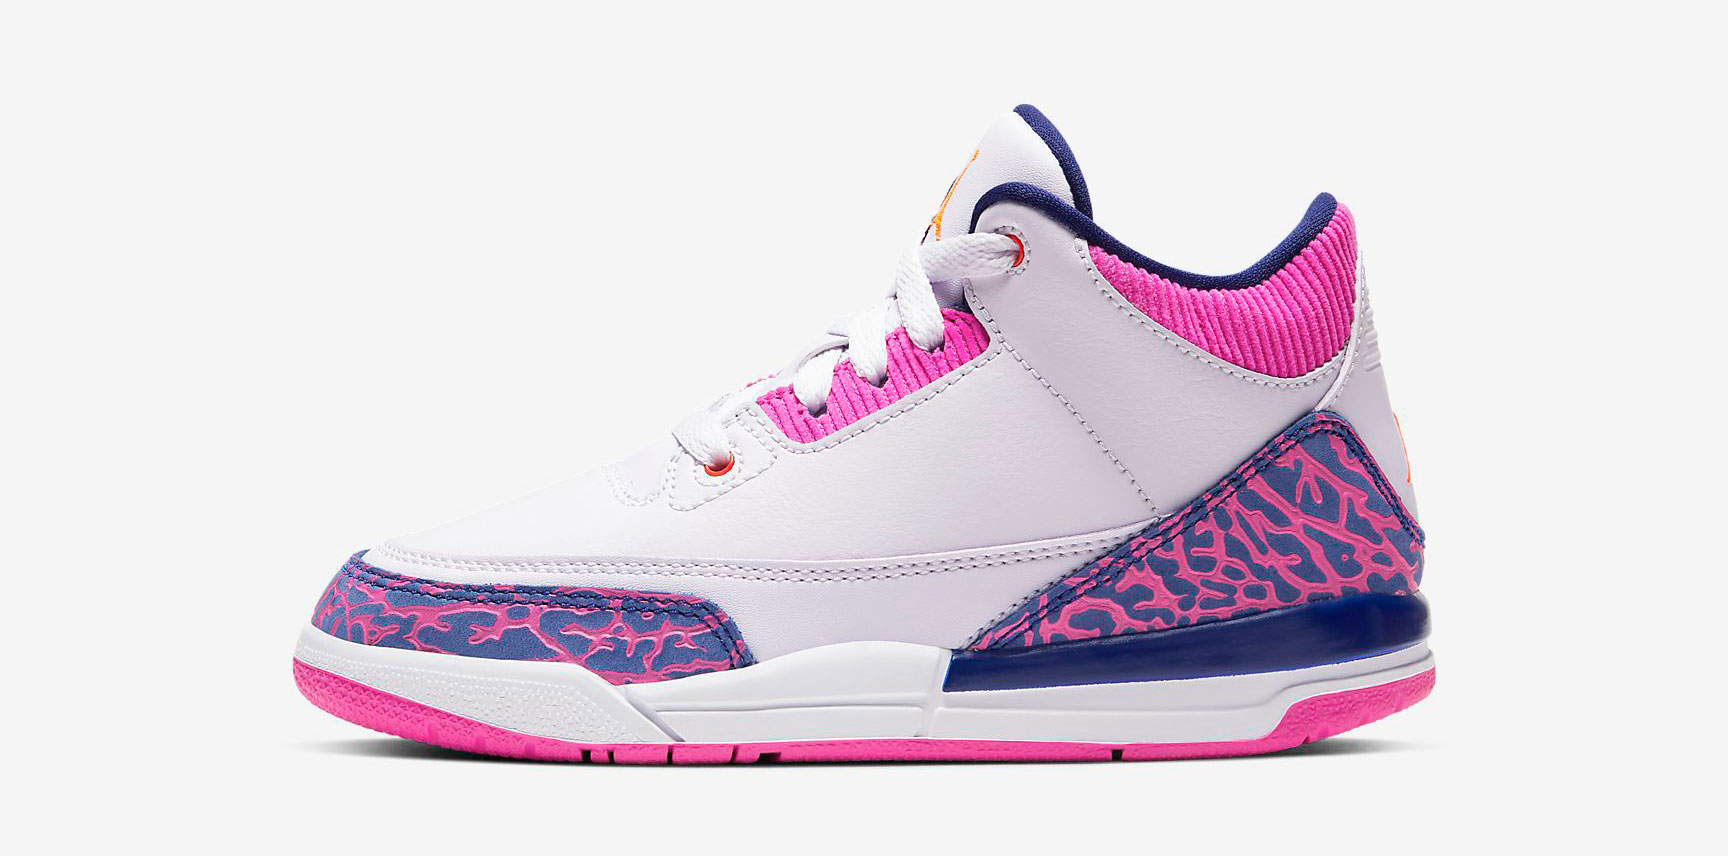 Where to Buy the Air Jordan 3 Barely Grape | SneakerFits.com